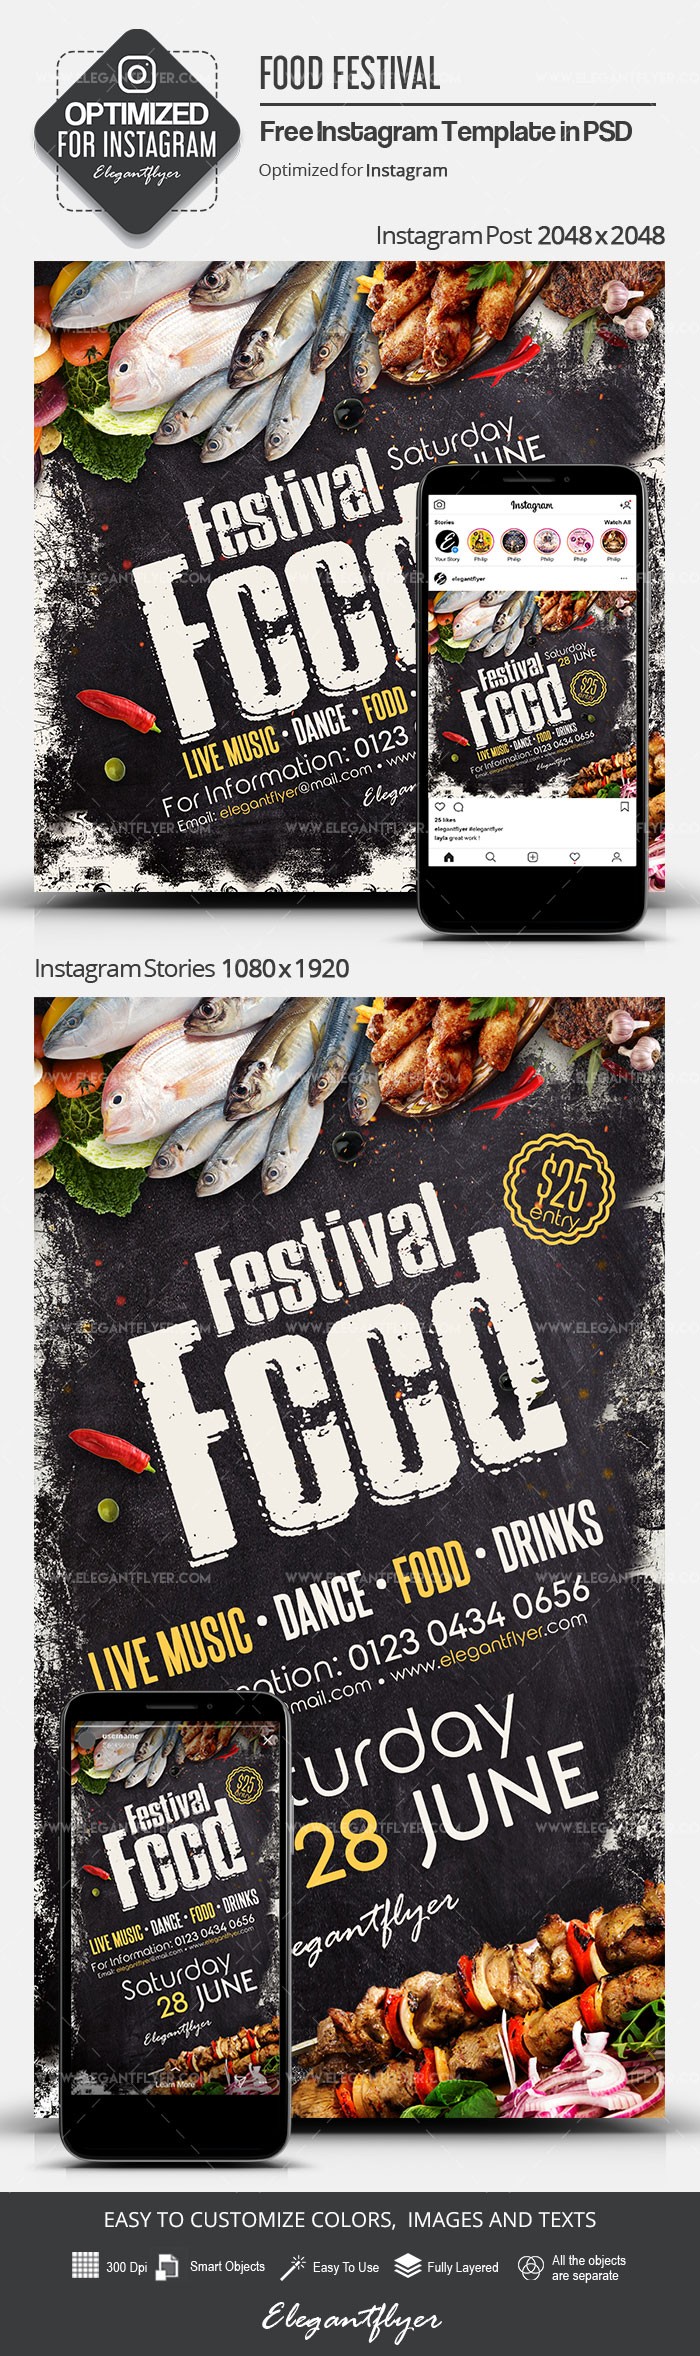 Food Festival Instagram by ElegantFlyer